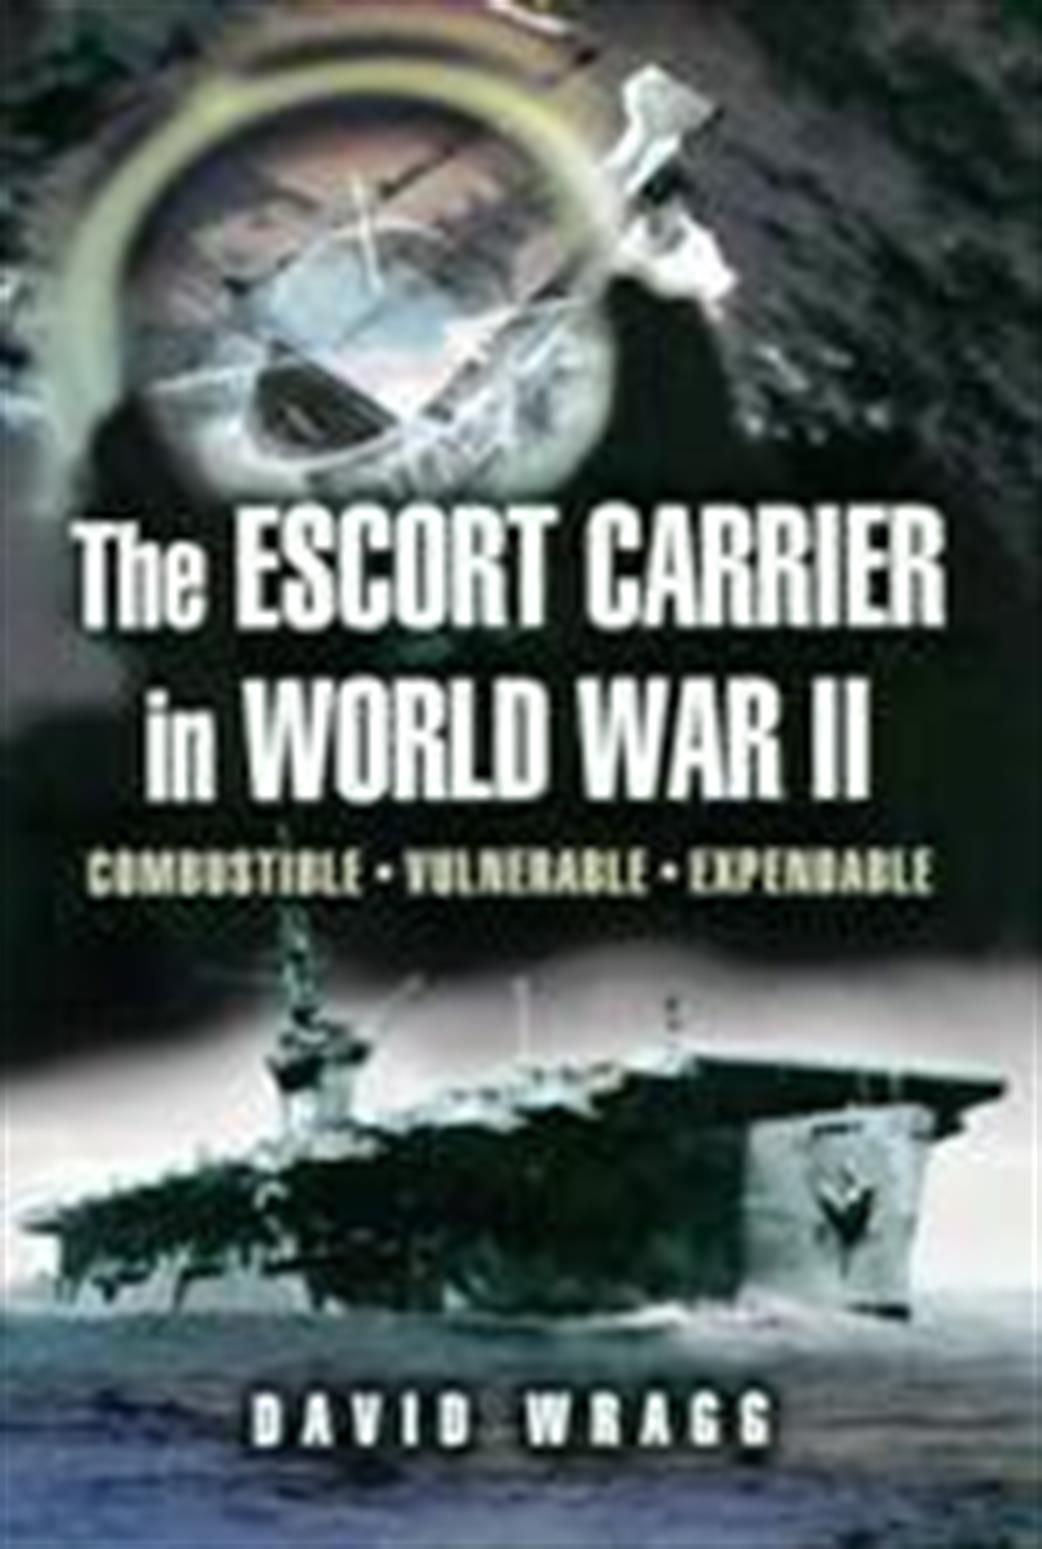 9781844152209 Escort Carrier In World War II by David Wragg